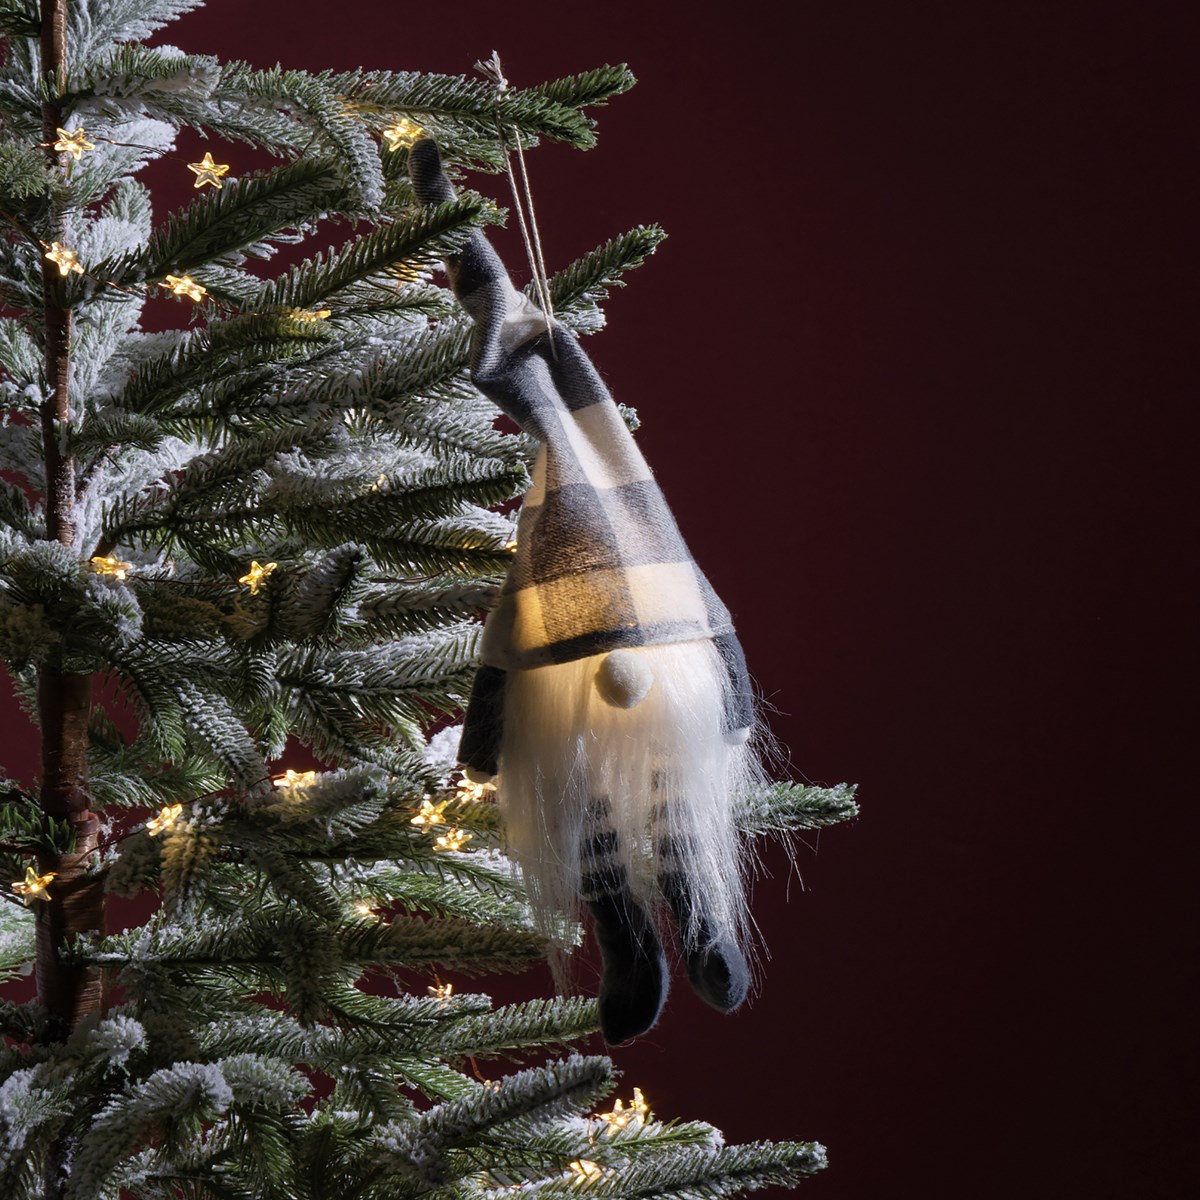 Grey Buffalo Check Gnome Ornament - Polyester, Cotton, Plastic, LED